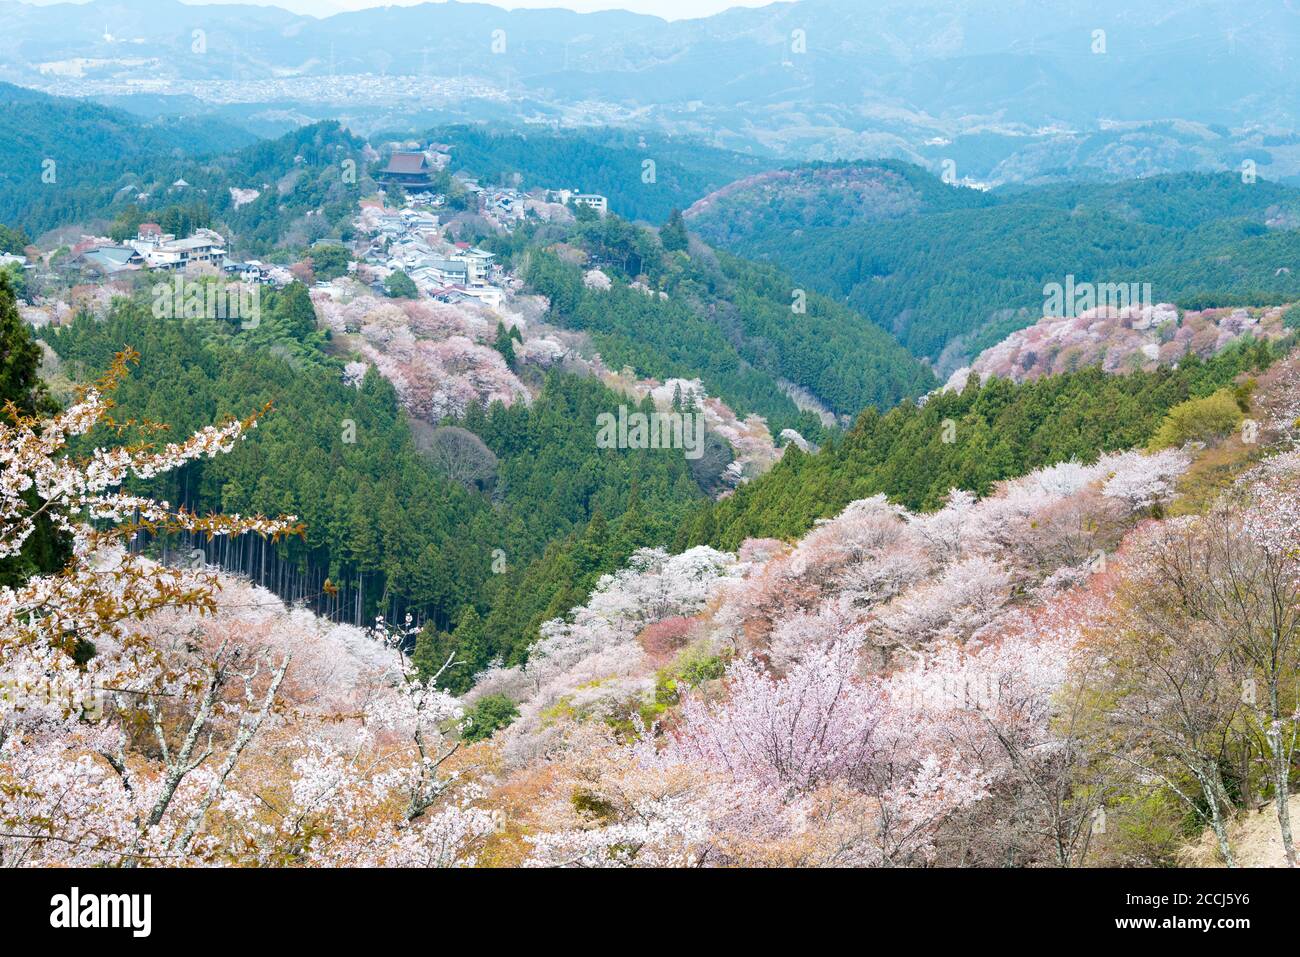 Nara, Japan - Cherry blossoms at Kamisenbon area in Mount Yoshino, Nara, Japan. Mt Yoshino is part of UNESCO World Heritage Site. Stock Photo